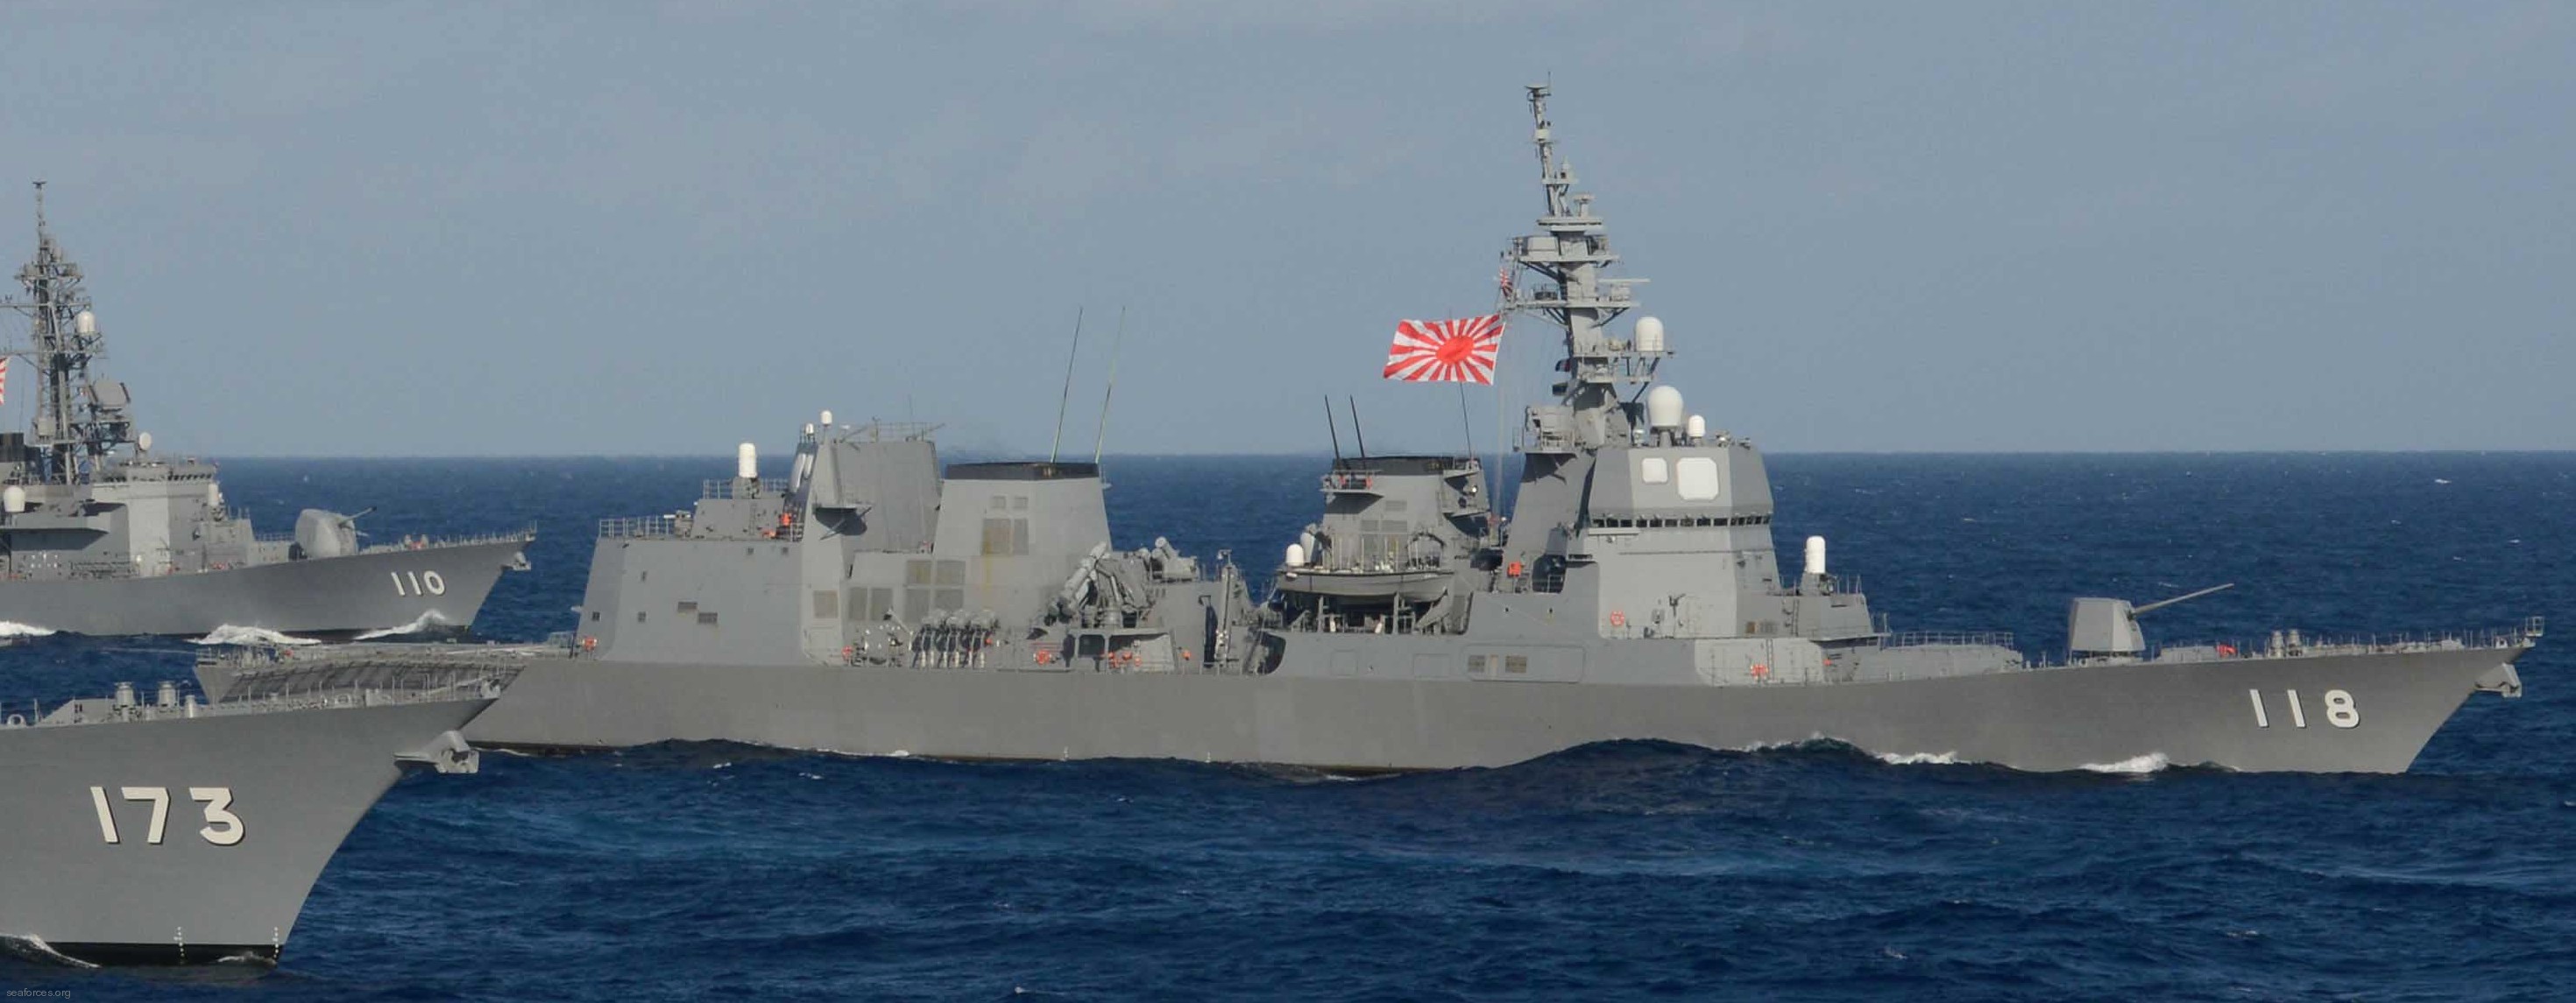 dd-118 js fuyuzuki akizuki class destroyer japan maritime self defense force jmsdf 18